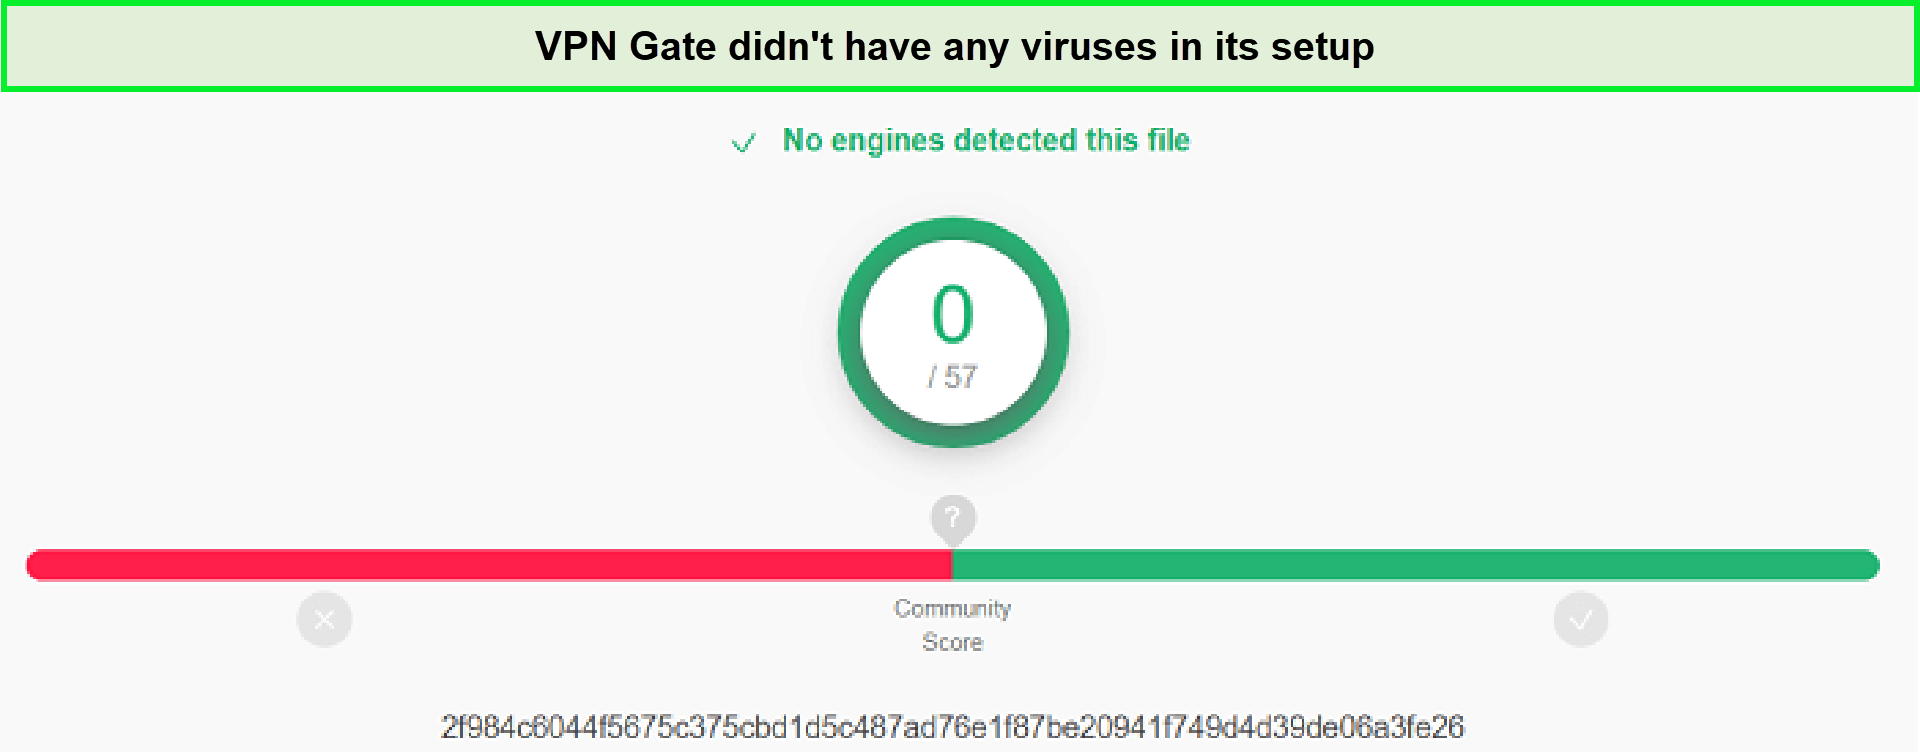 Virus-Test-in-UK-VPN-Gate